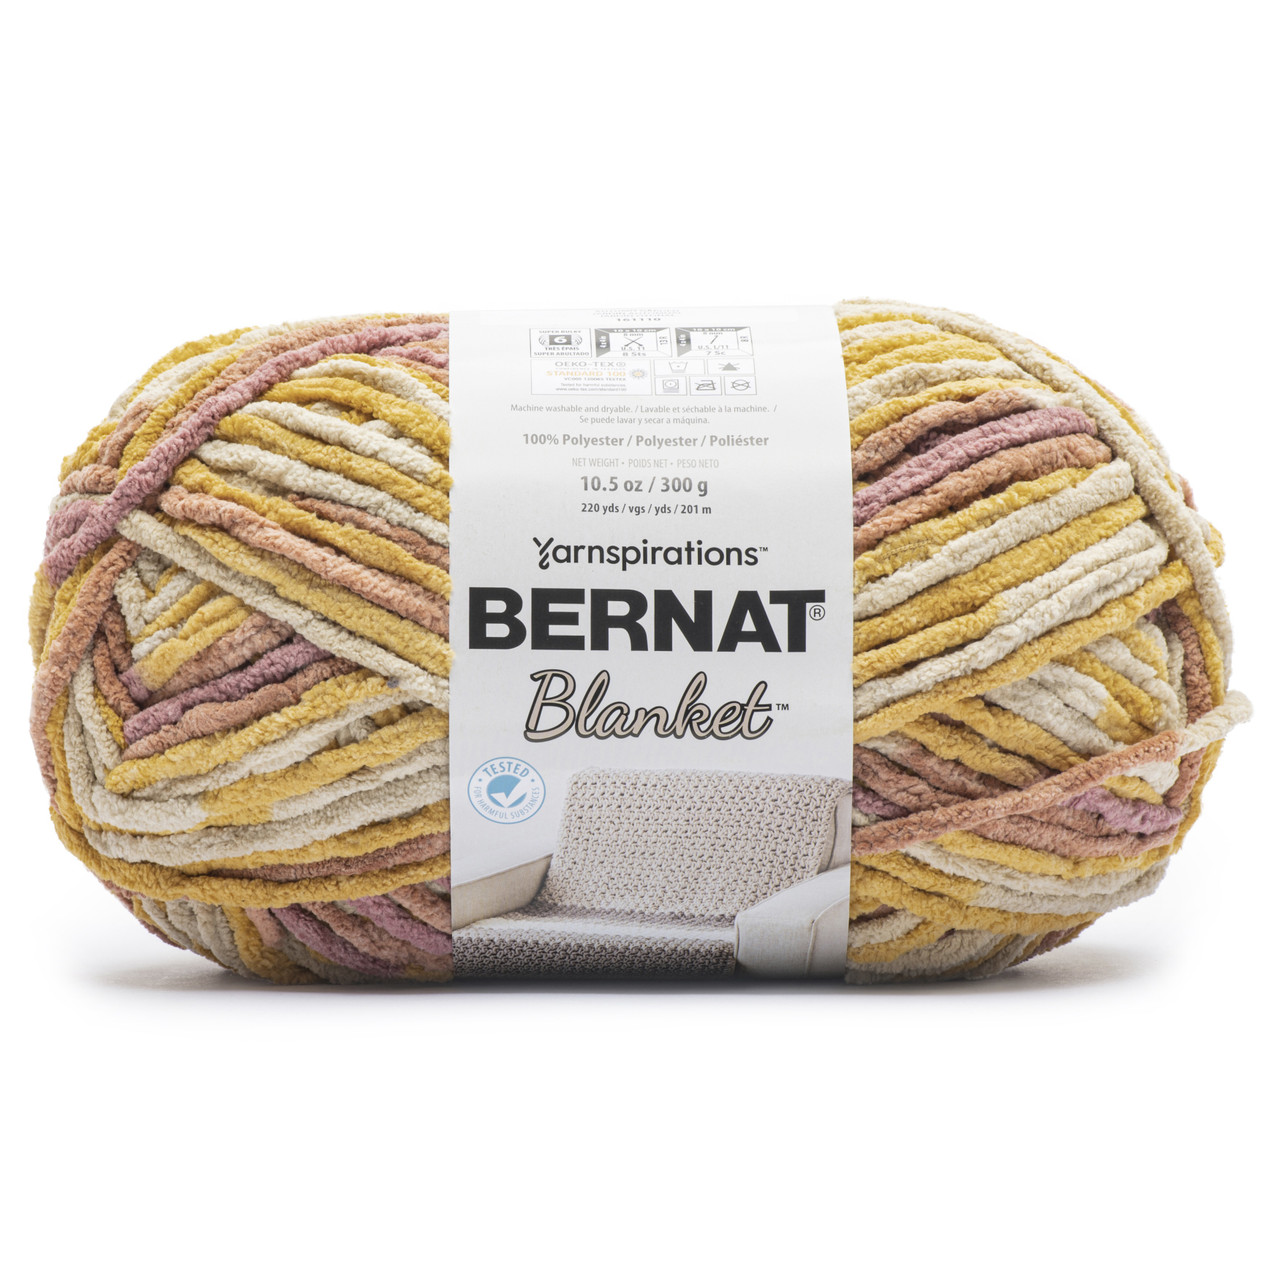 Bernat Blanket Yarn - Big Ball (10.5 oz) - 2 Pack with Pattern (olive)